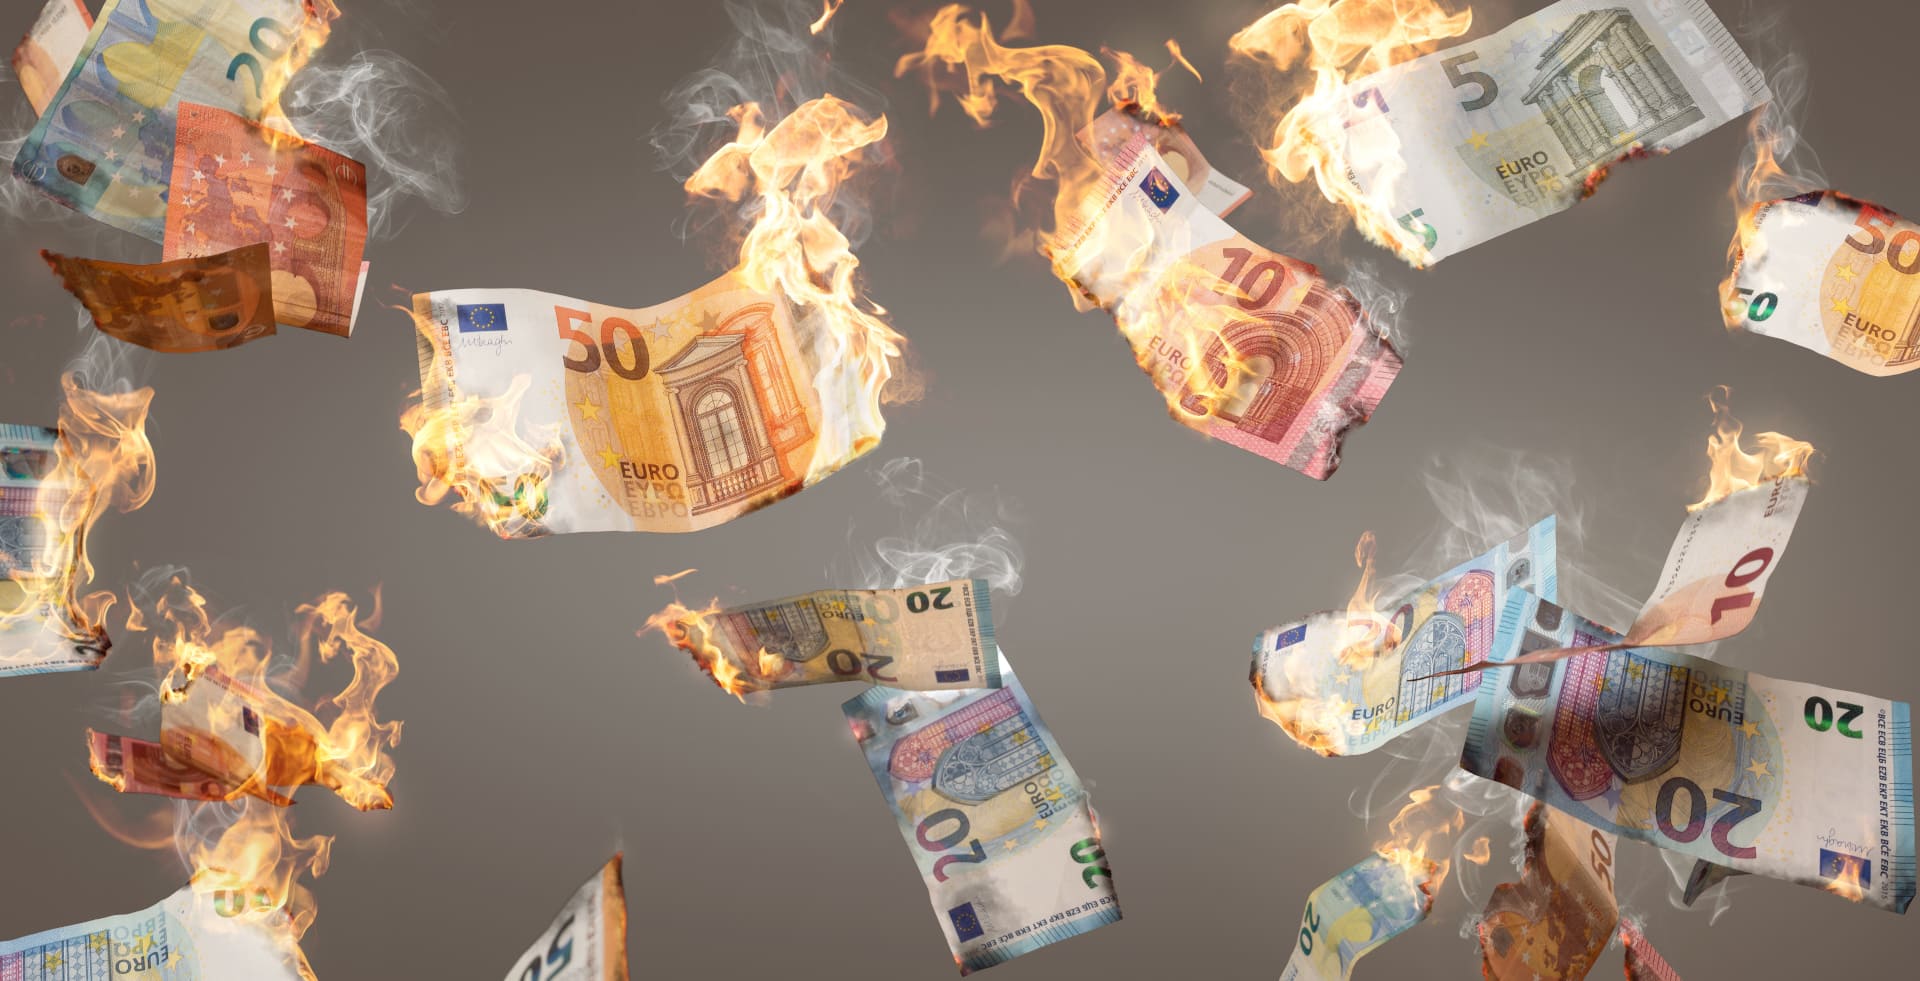 verschiedene brennende Euronoten fallen herunter